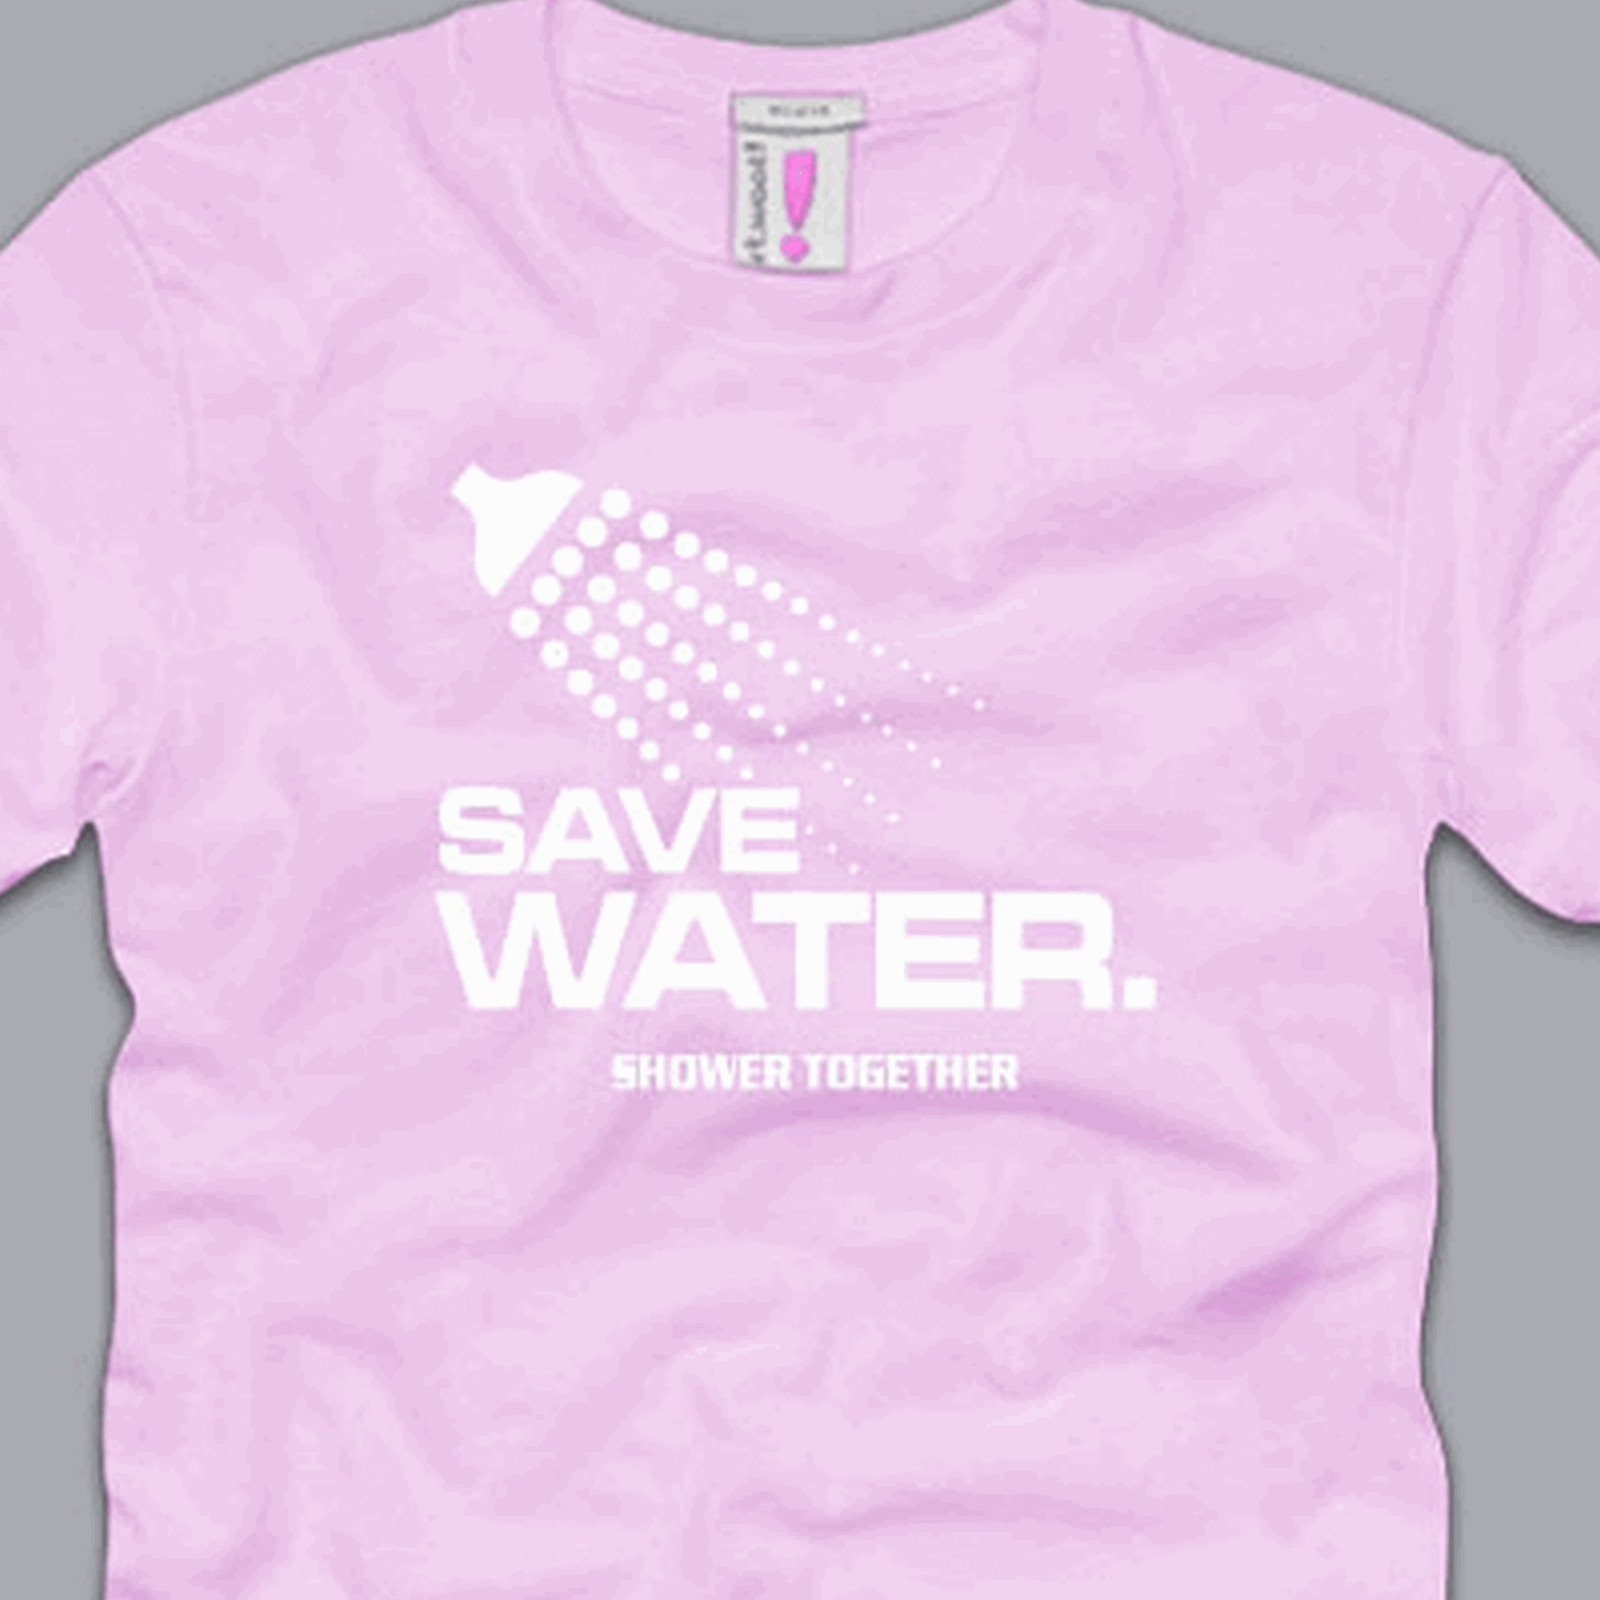 Save Water Shower Together S M L Xl Xl Xl T Shirt Funny Sex Humor Beer Keg Ebay